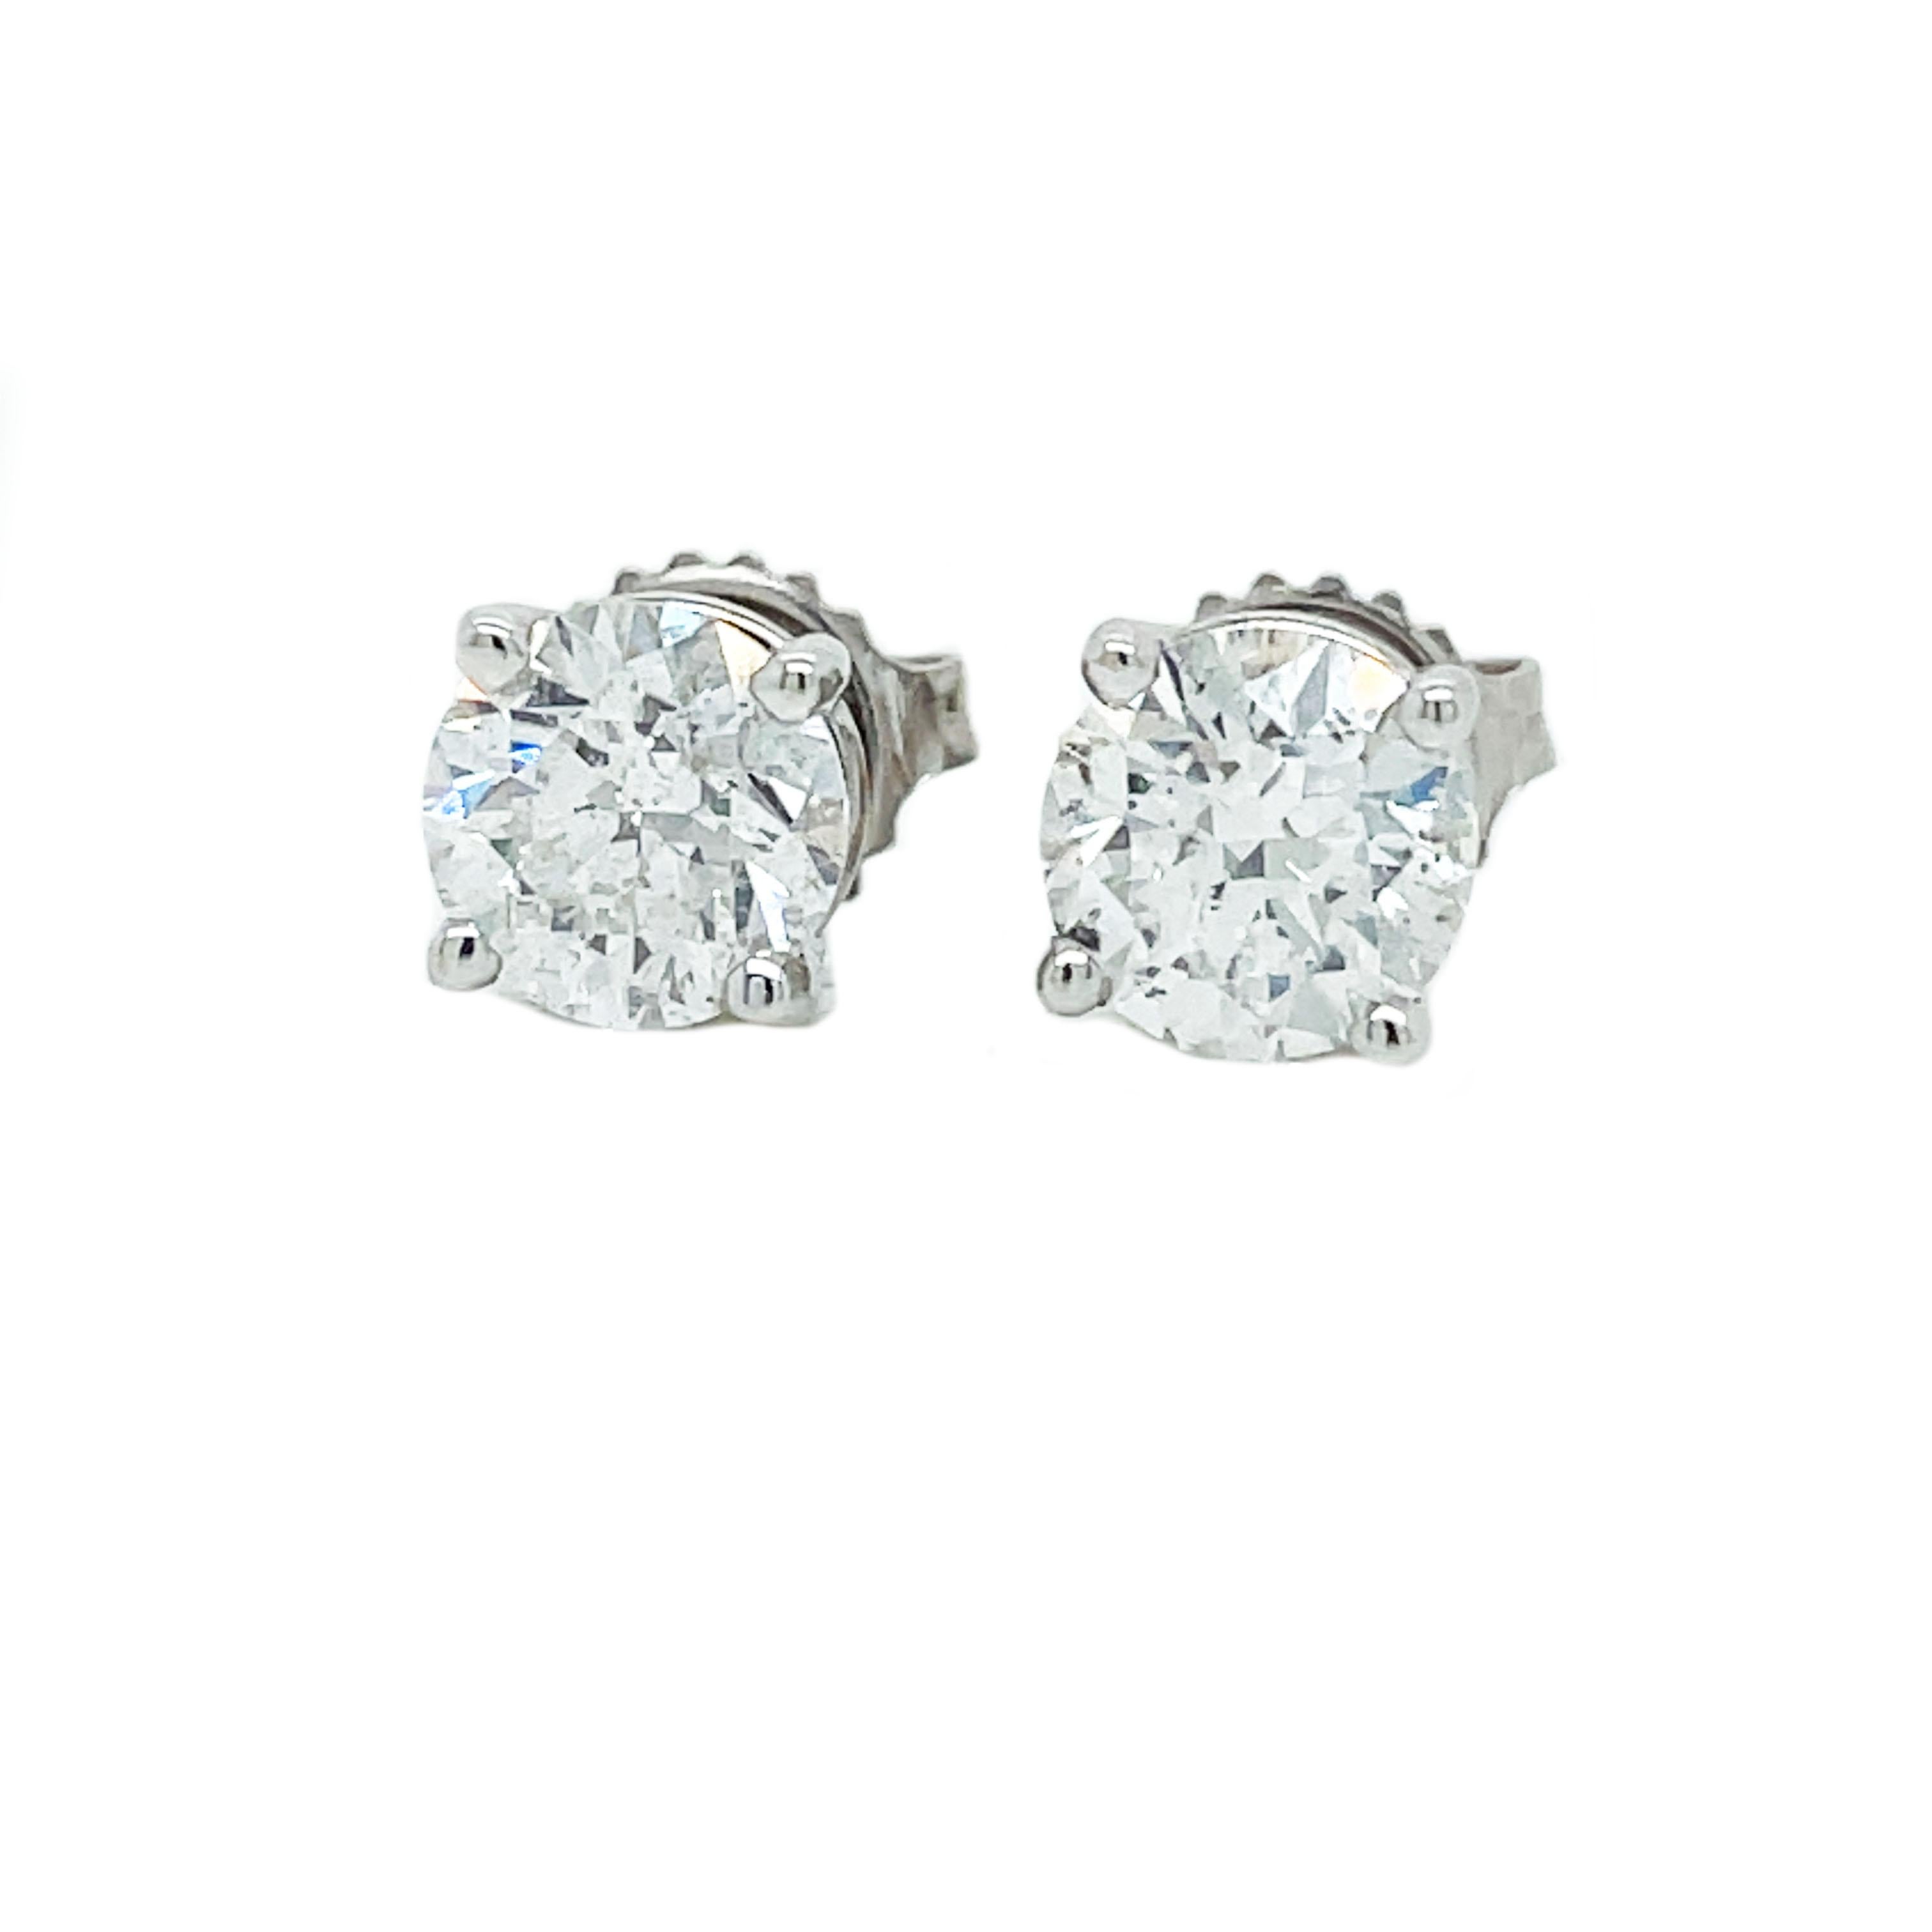 2+ Carat Diamond Stud Earrings in 14K White Gold 4